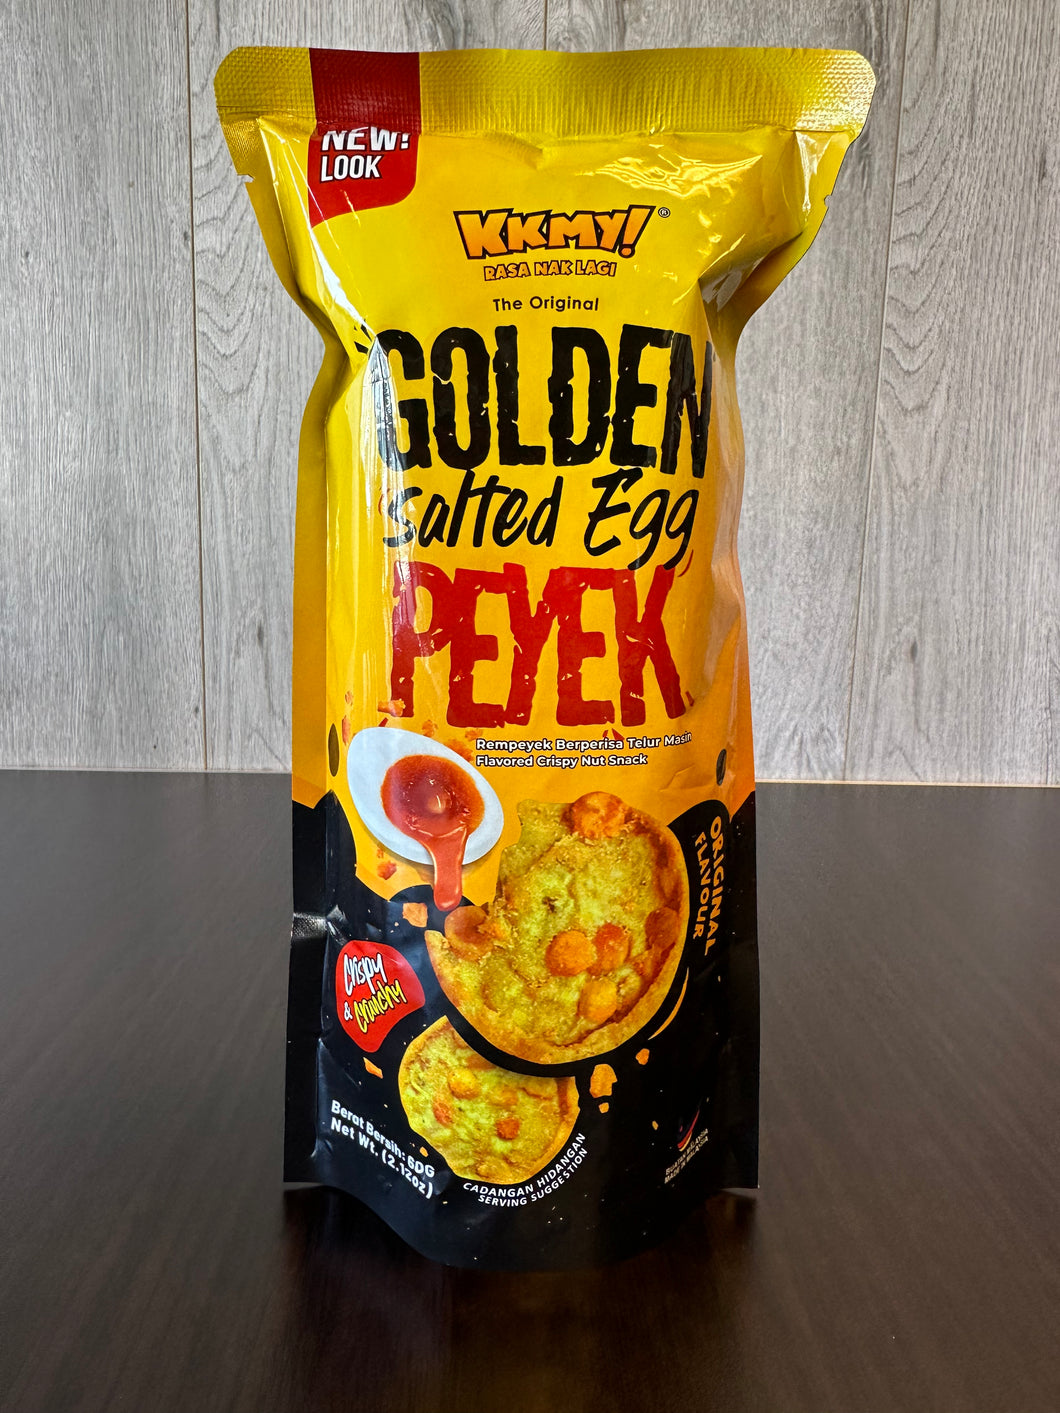 Golden Salted Egg Peyek